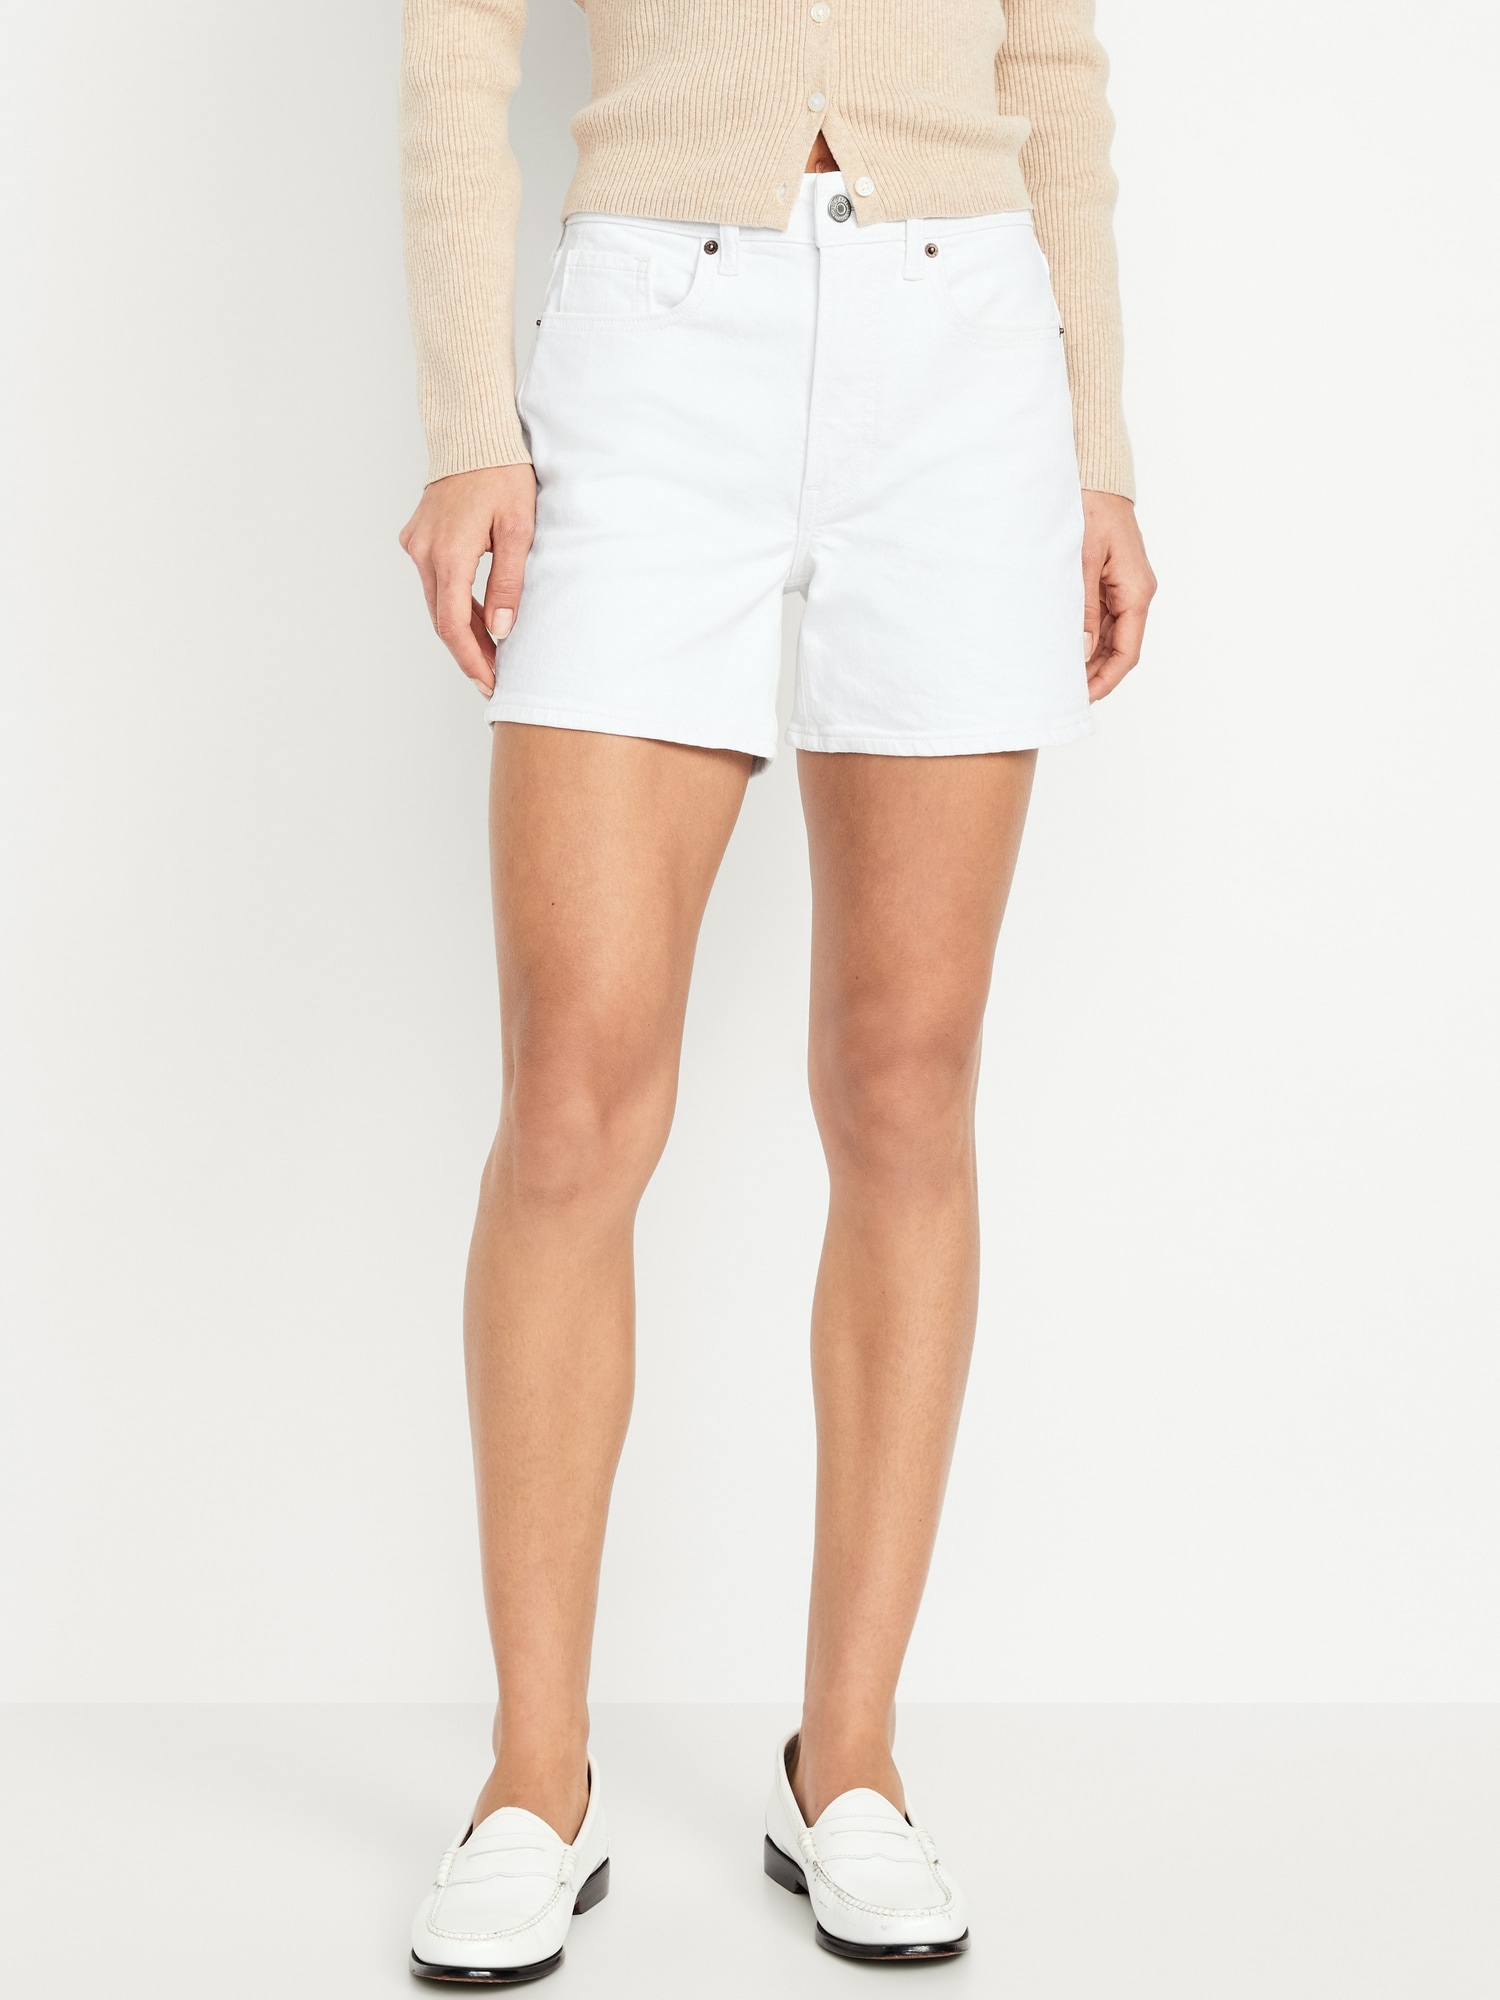 High-Waisted OG Jean Shorts - 5-inch inseam